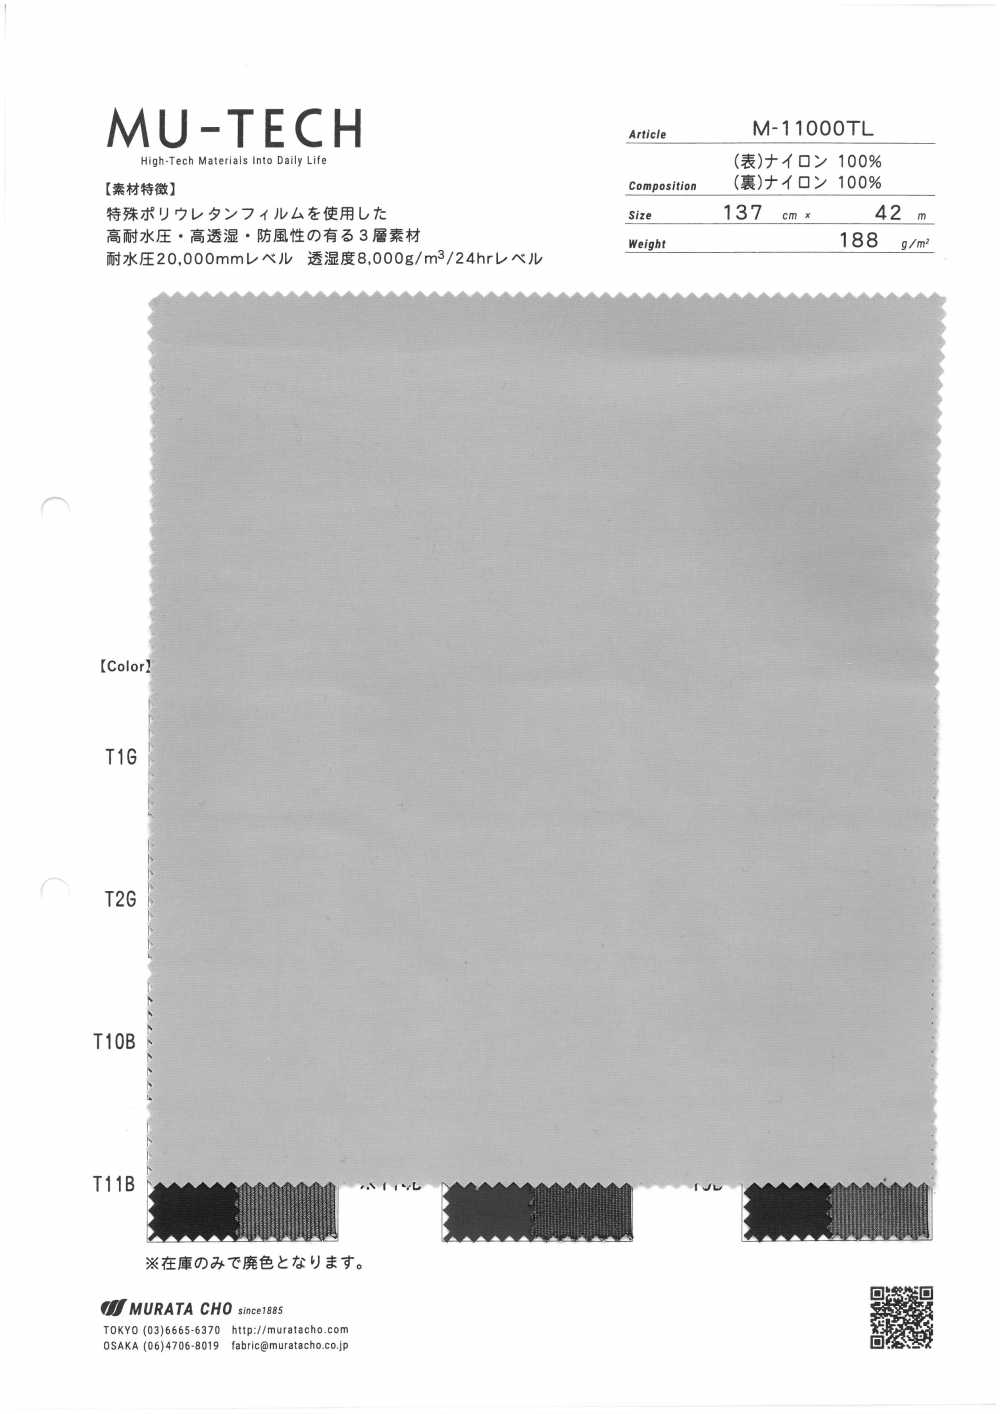 M-11000TL Fuzzy De Nailon De 3 Capas De Alto Rendimiento[Fabrica Textil] Muratacho